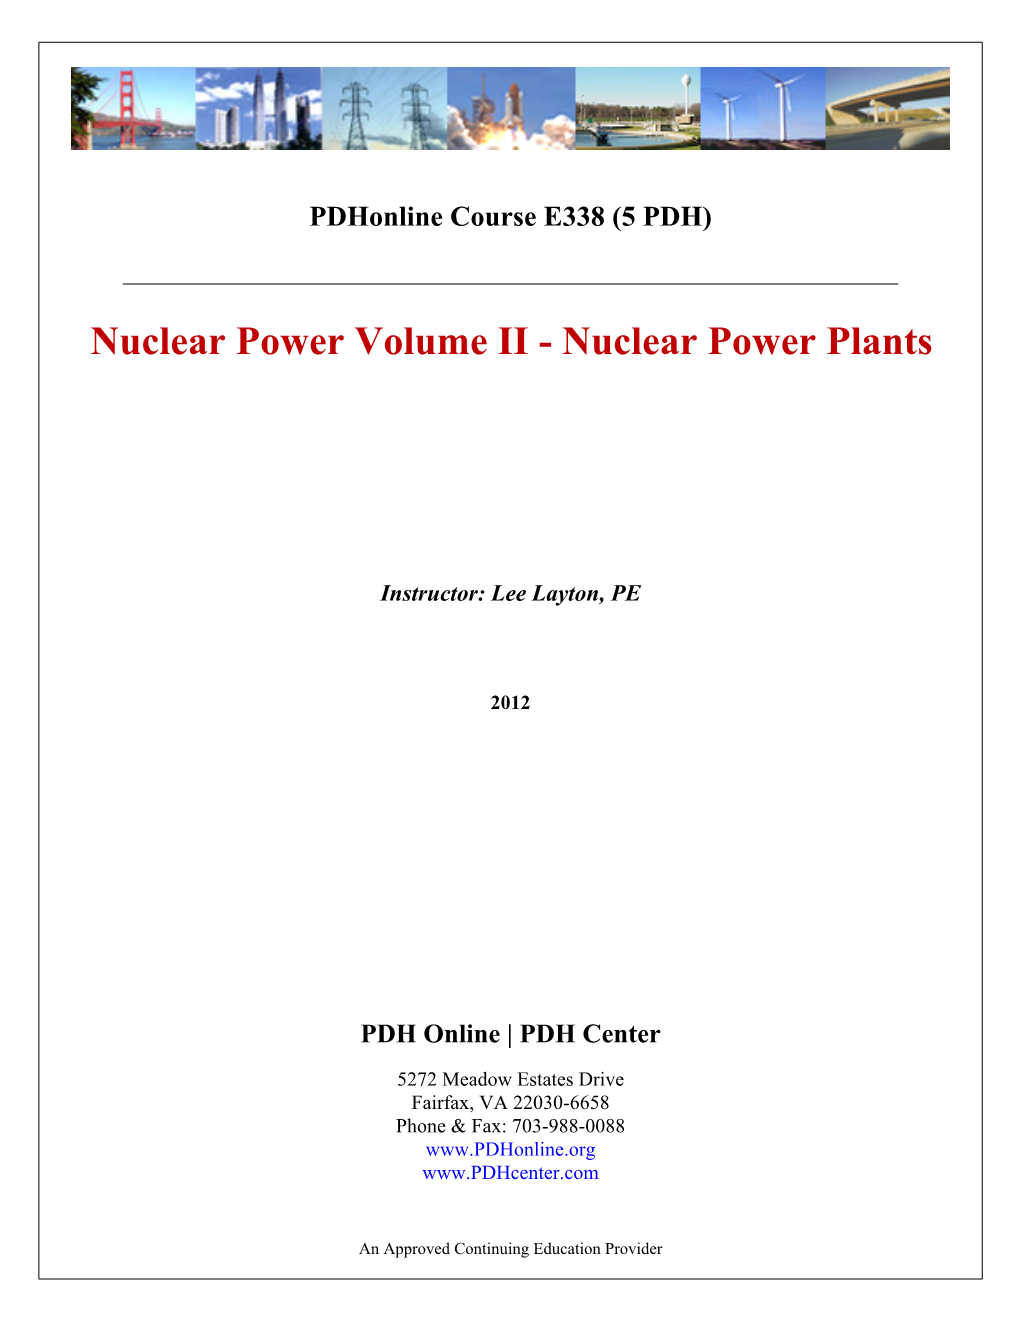 Nuclear Power Volume II - Nuclear Power Plants